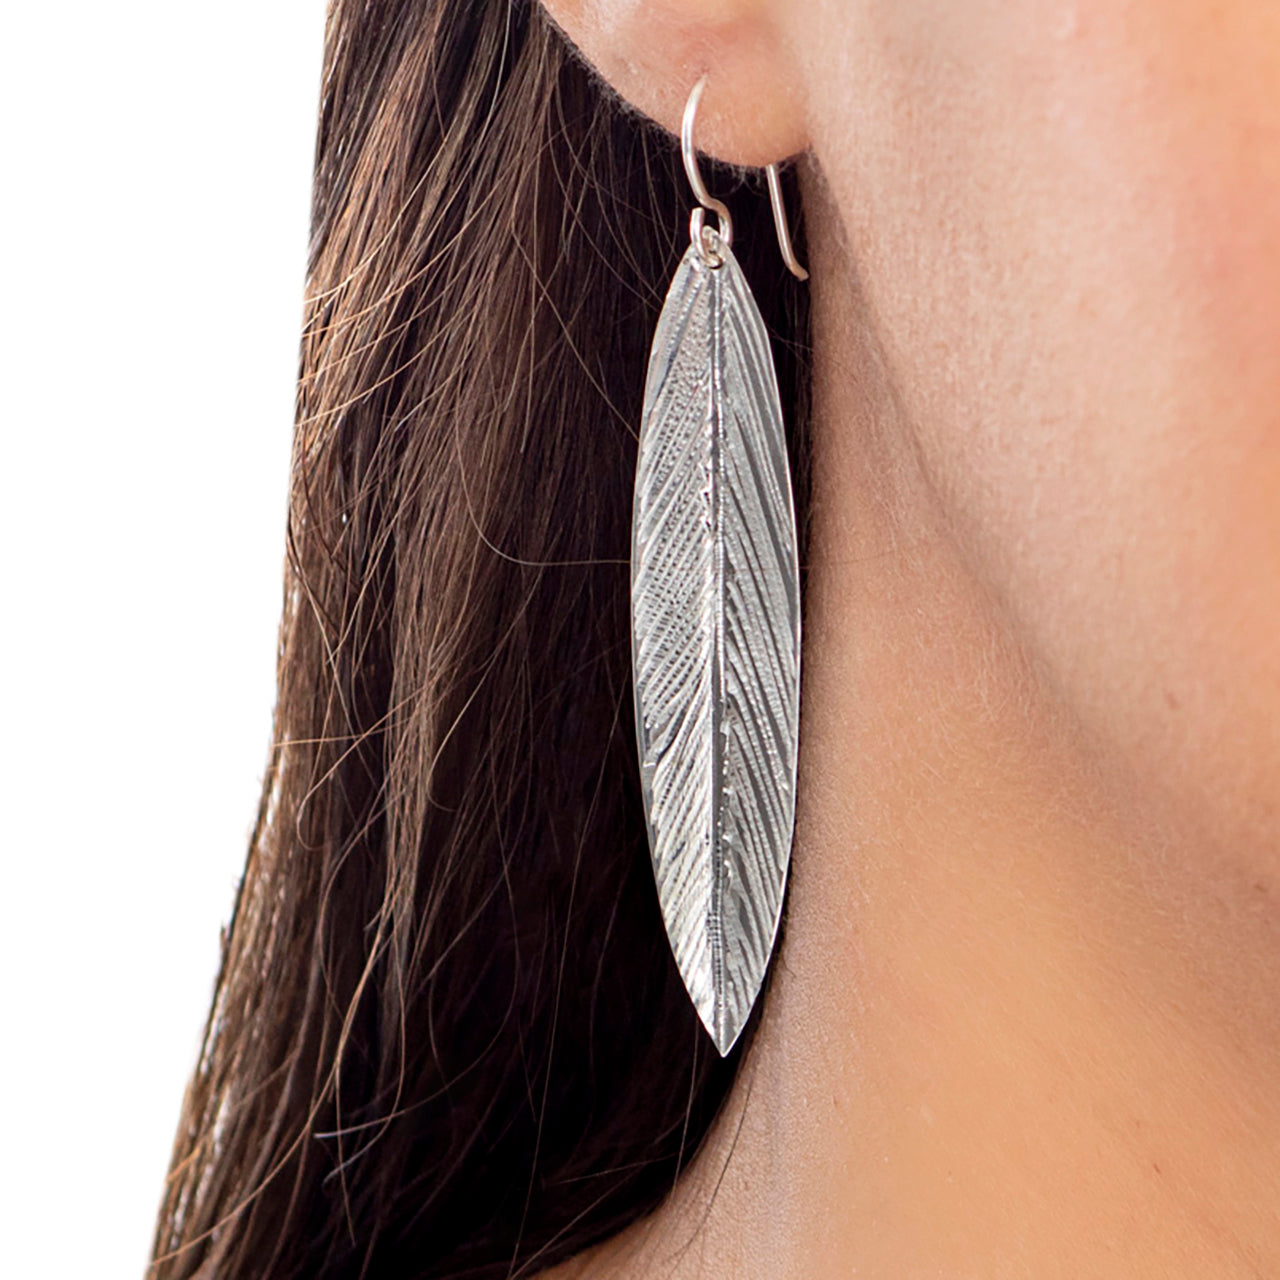 Lovisa Multicoloured Feather Chain Drop Earrings - ShopStyle